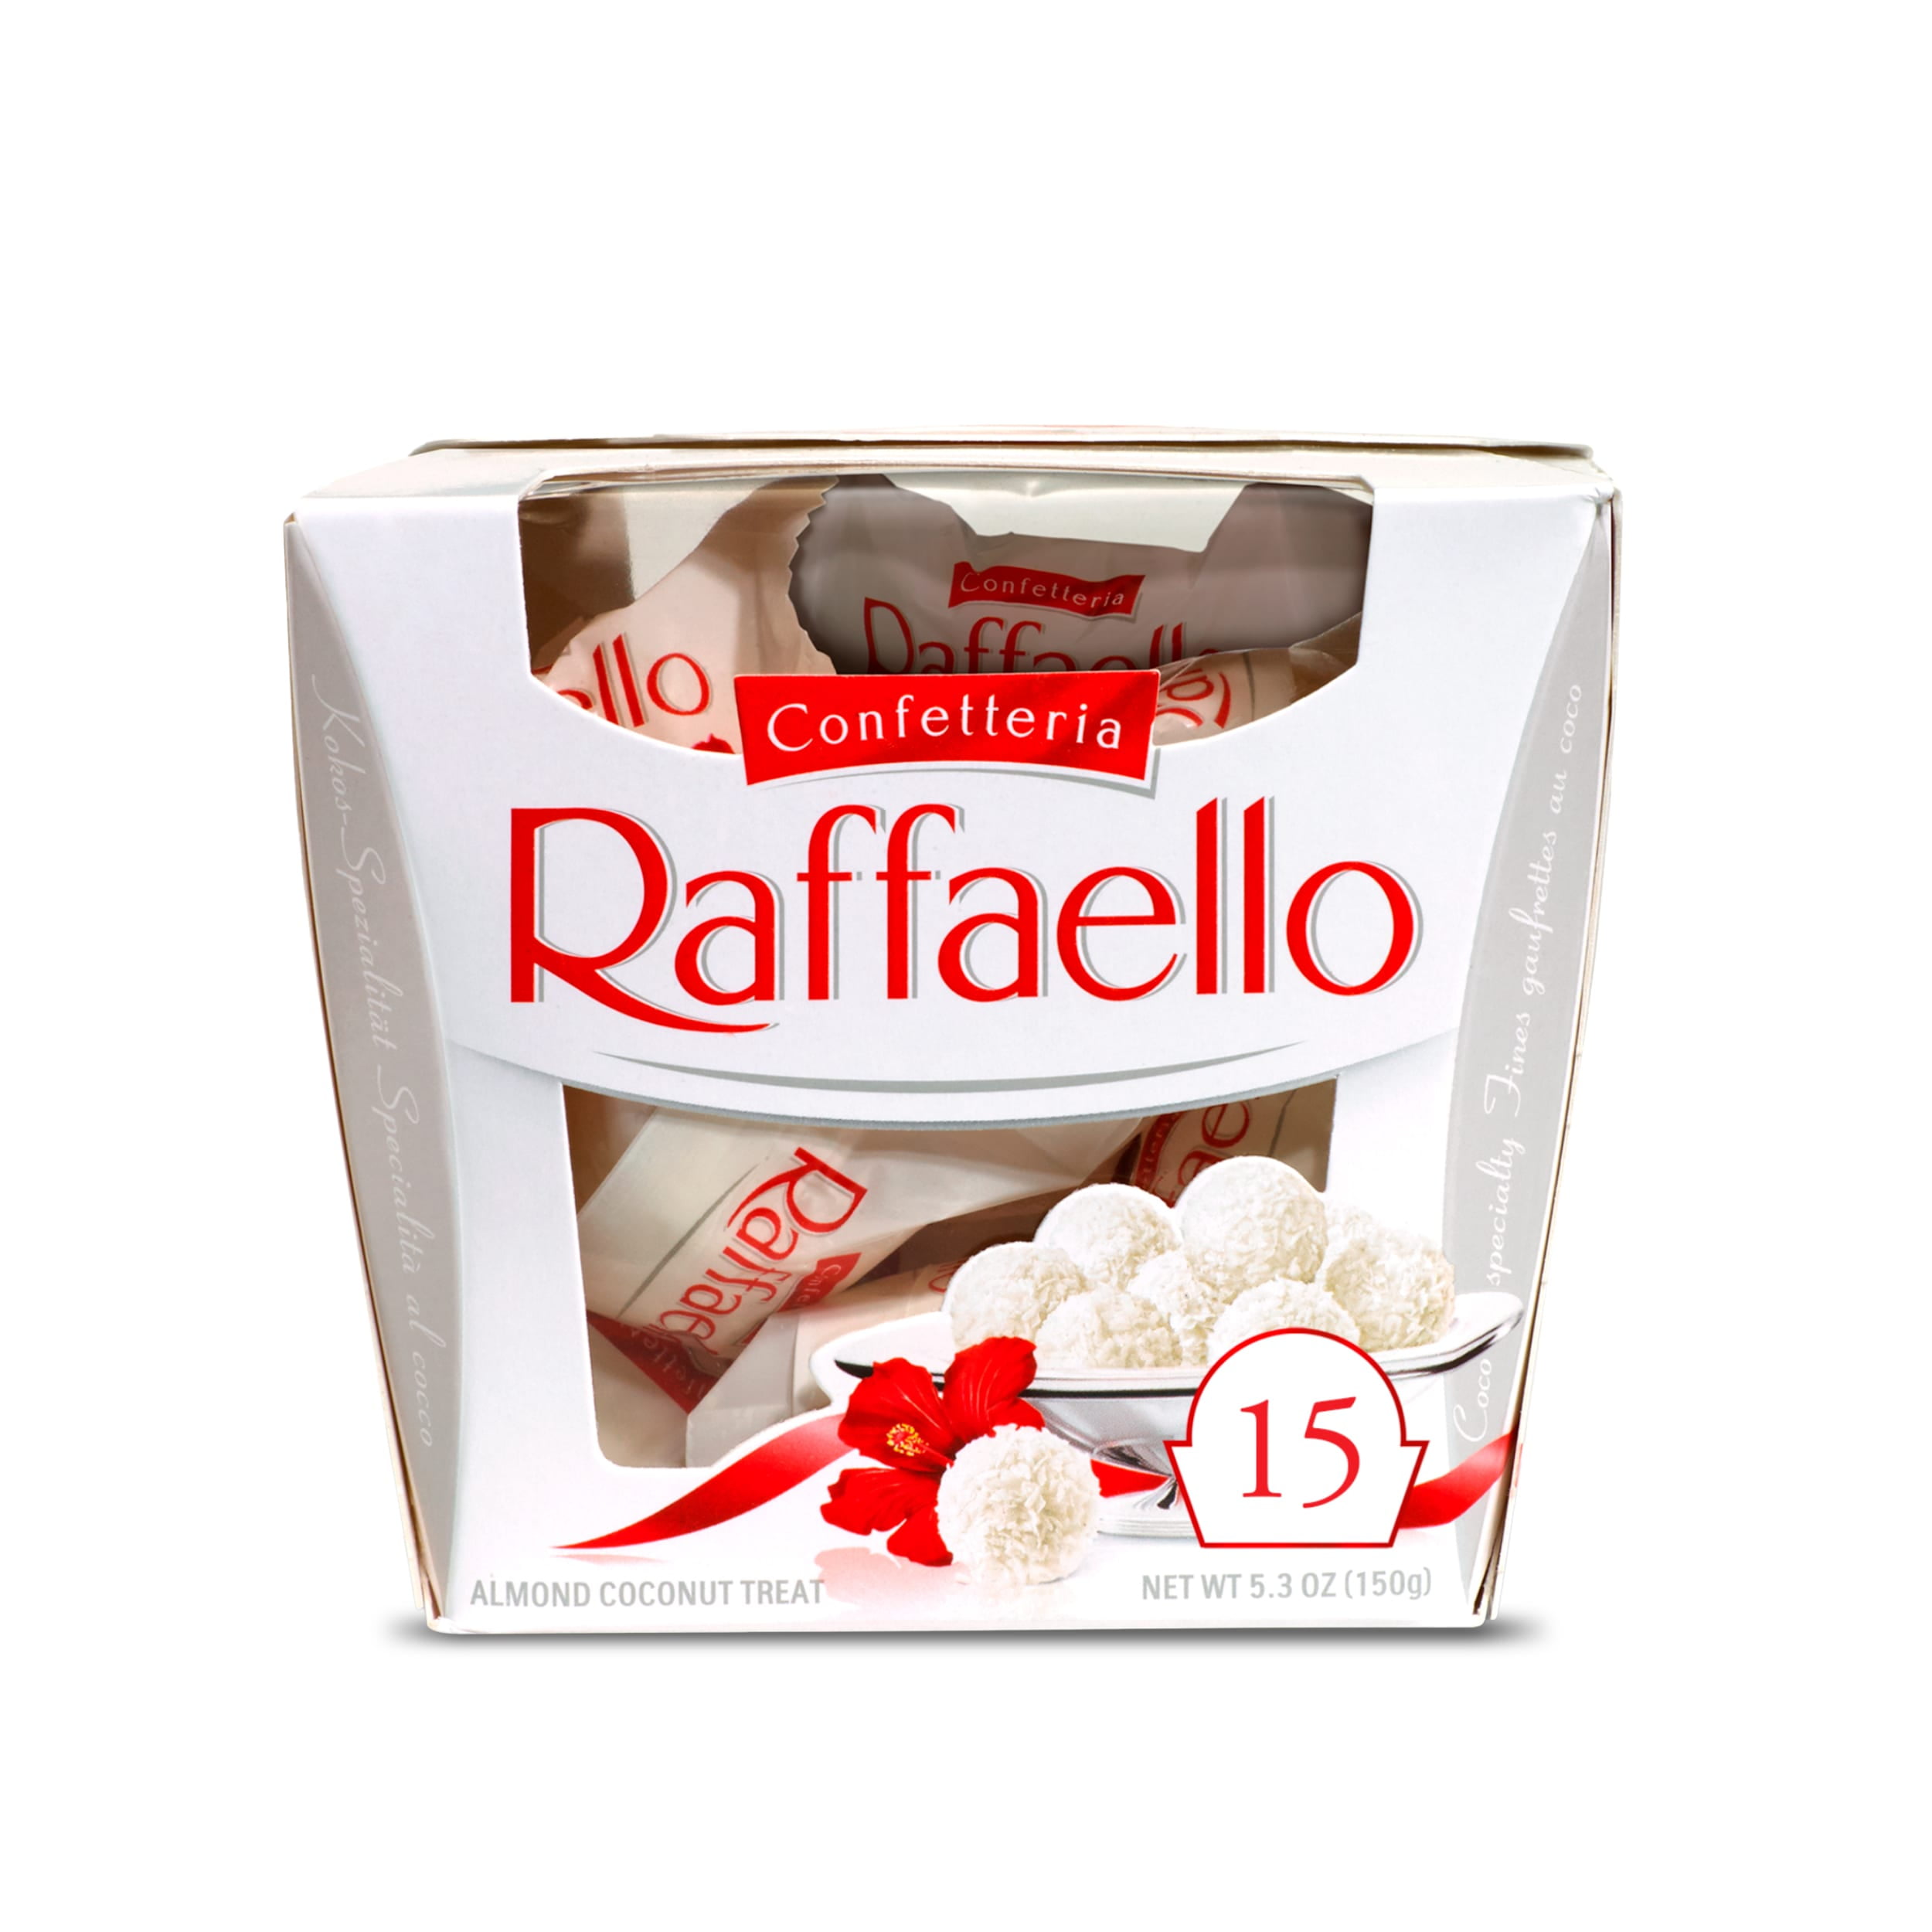 Ferrero Rocher Premium White Chocolate Hazelnut Bars, 8 Pack, Valentine's  Day Chocolate, 3.1 oz Each